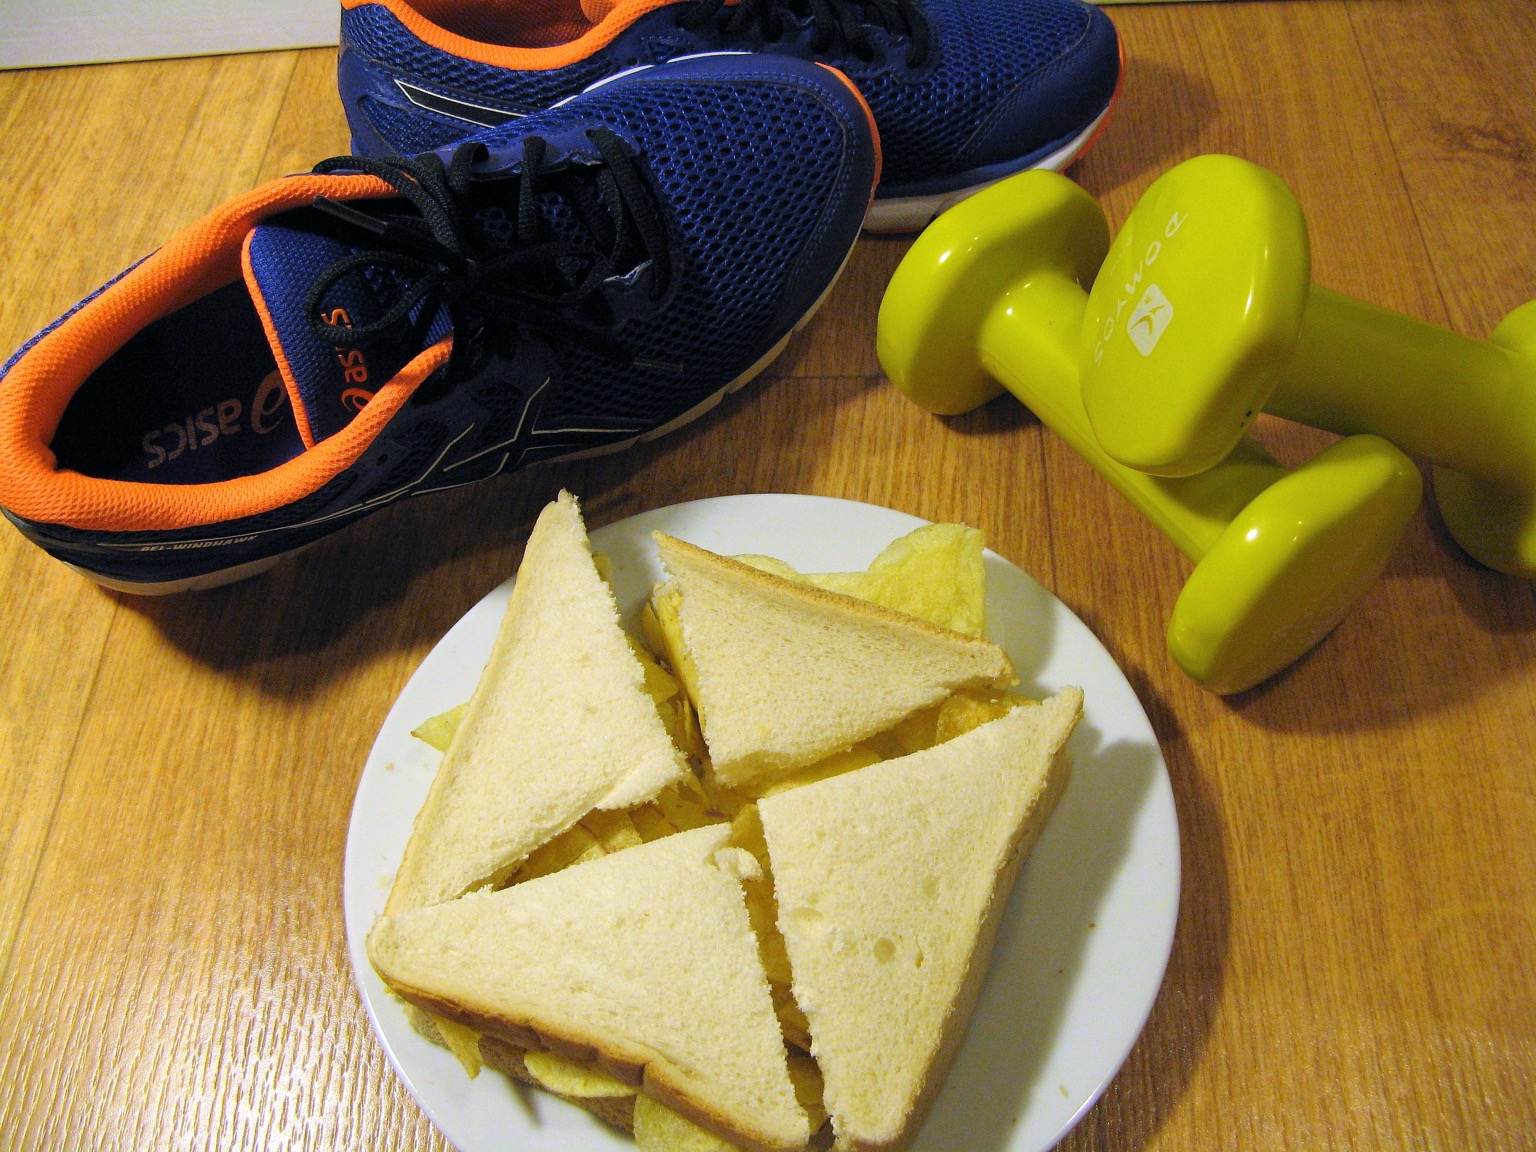 Quartered crisp sandwich with exercise equipment